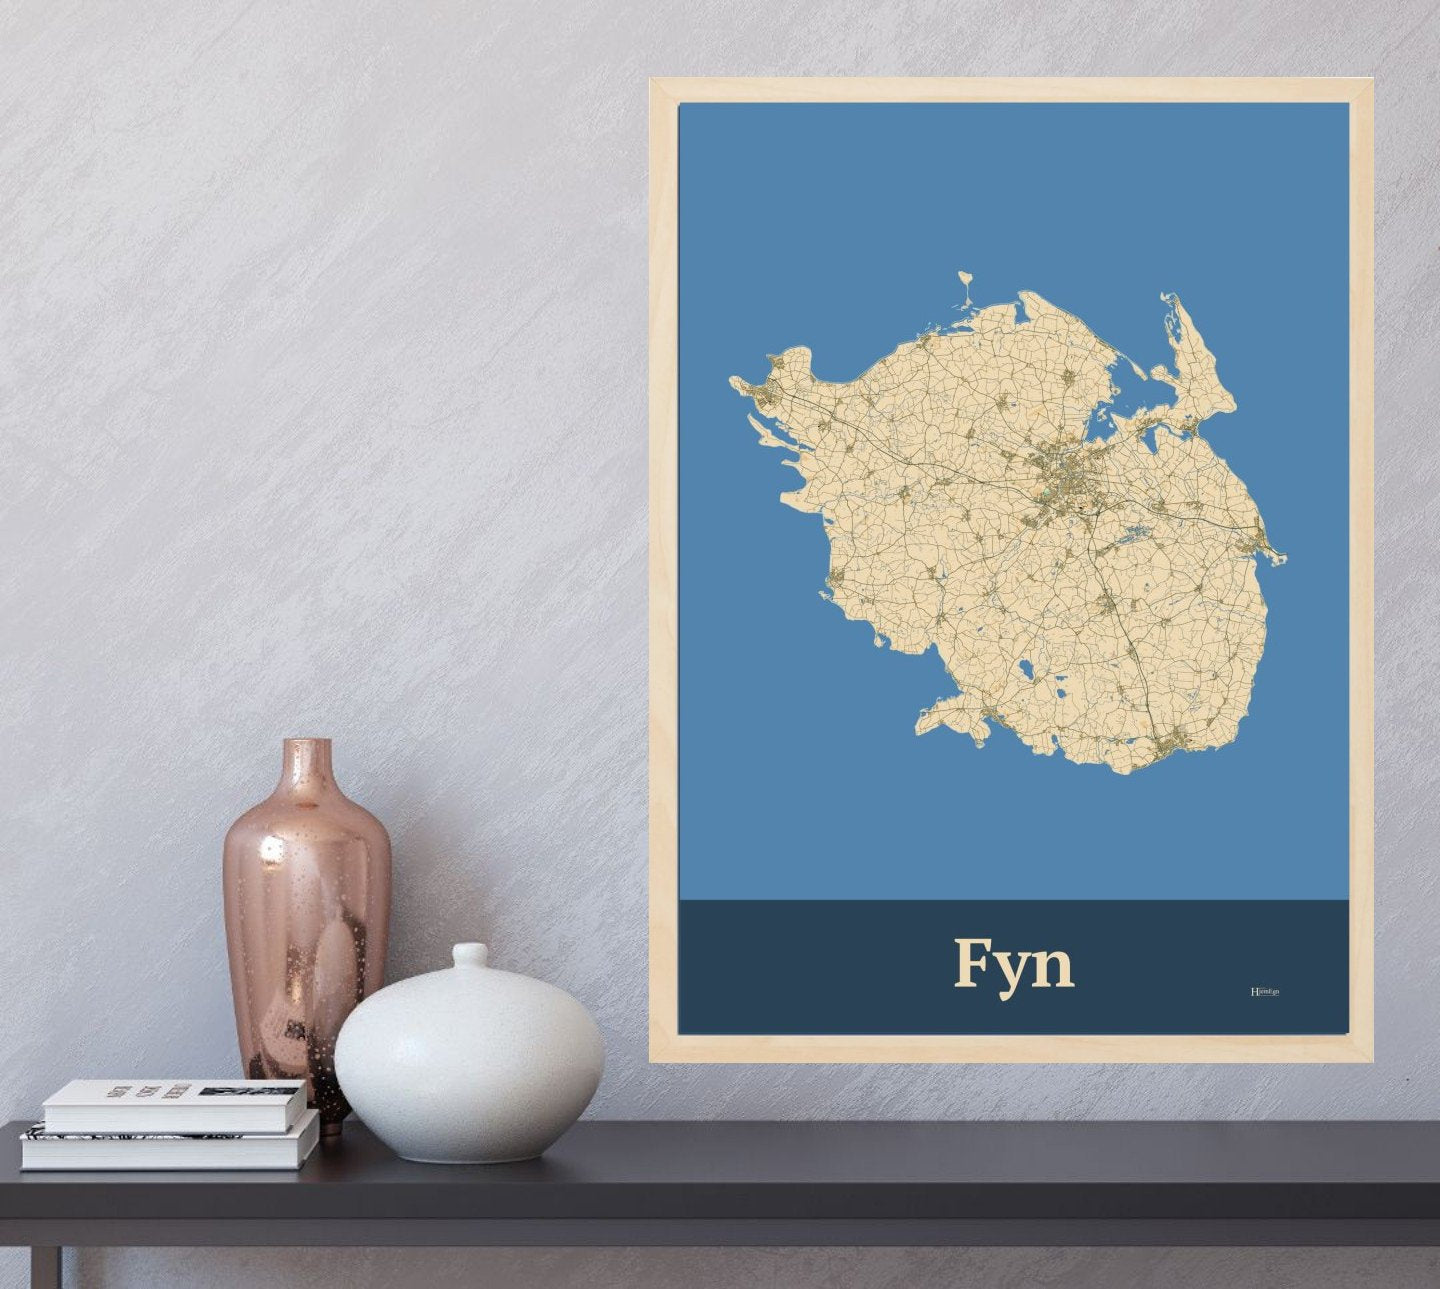 Fyn plakat i farve  og HjemEgn.dk design firkantet. Design ø-kort for Fyn